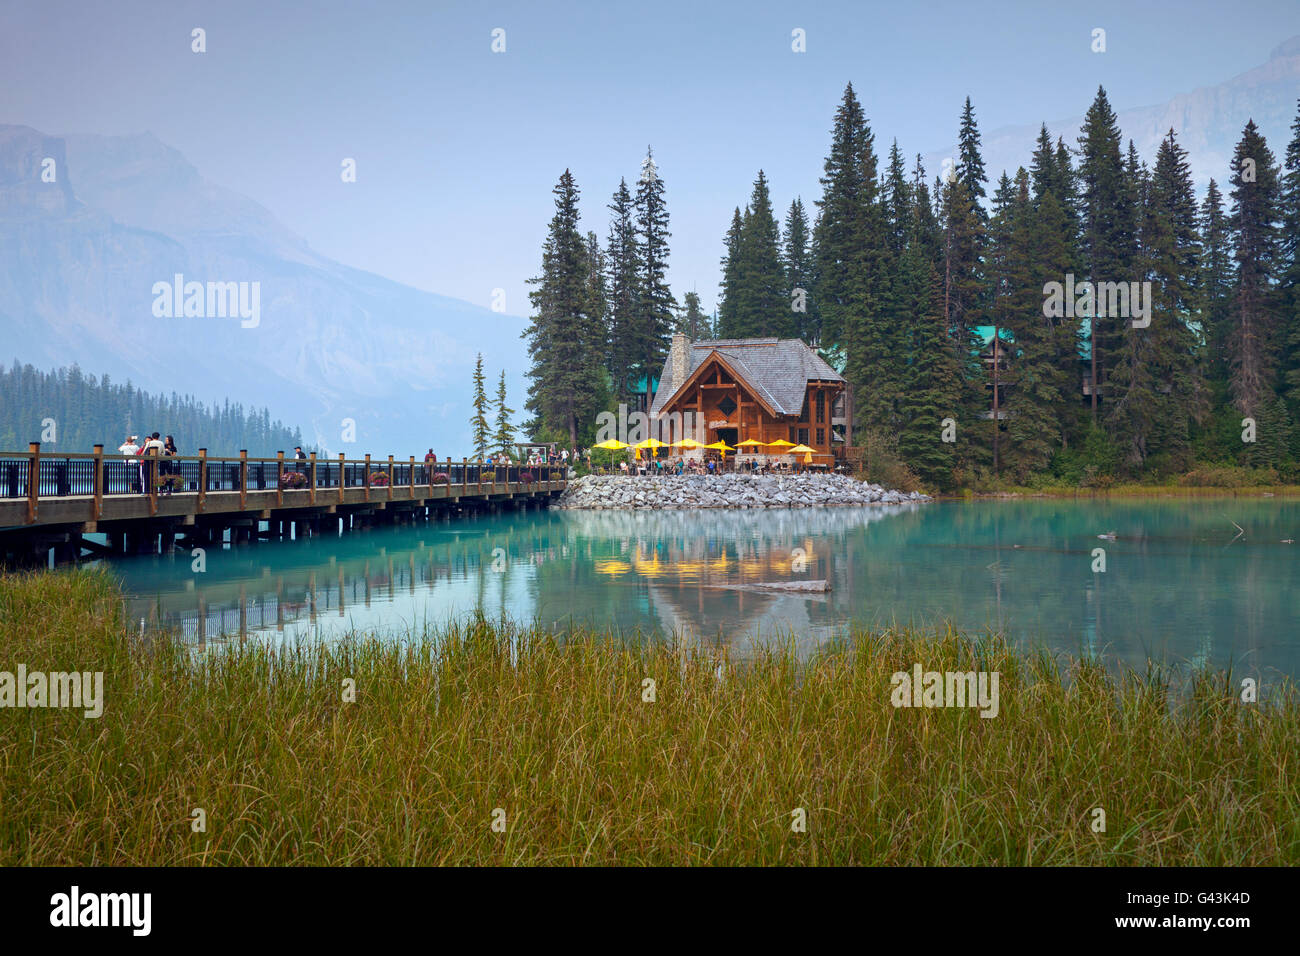 Tourists at Emerald Lake Lodge, conference centre along Emerald Lake, Yoho National Park, British Columbia, Canada Stock Photo